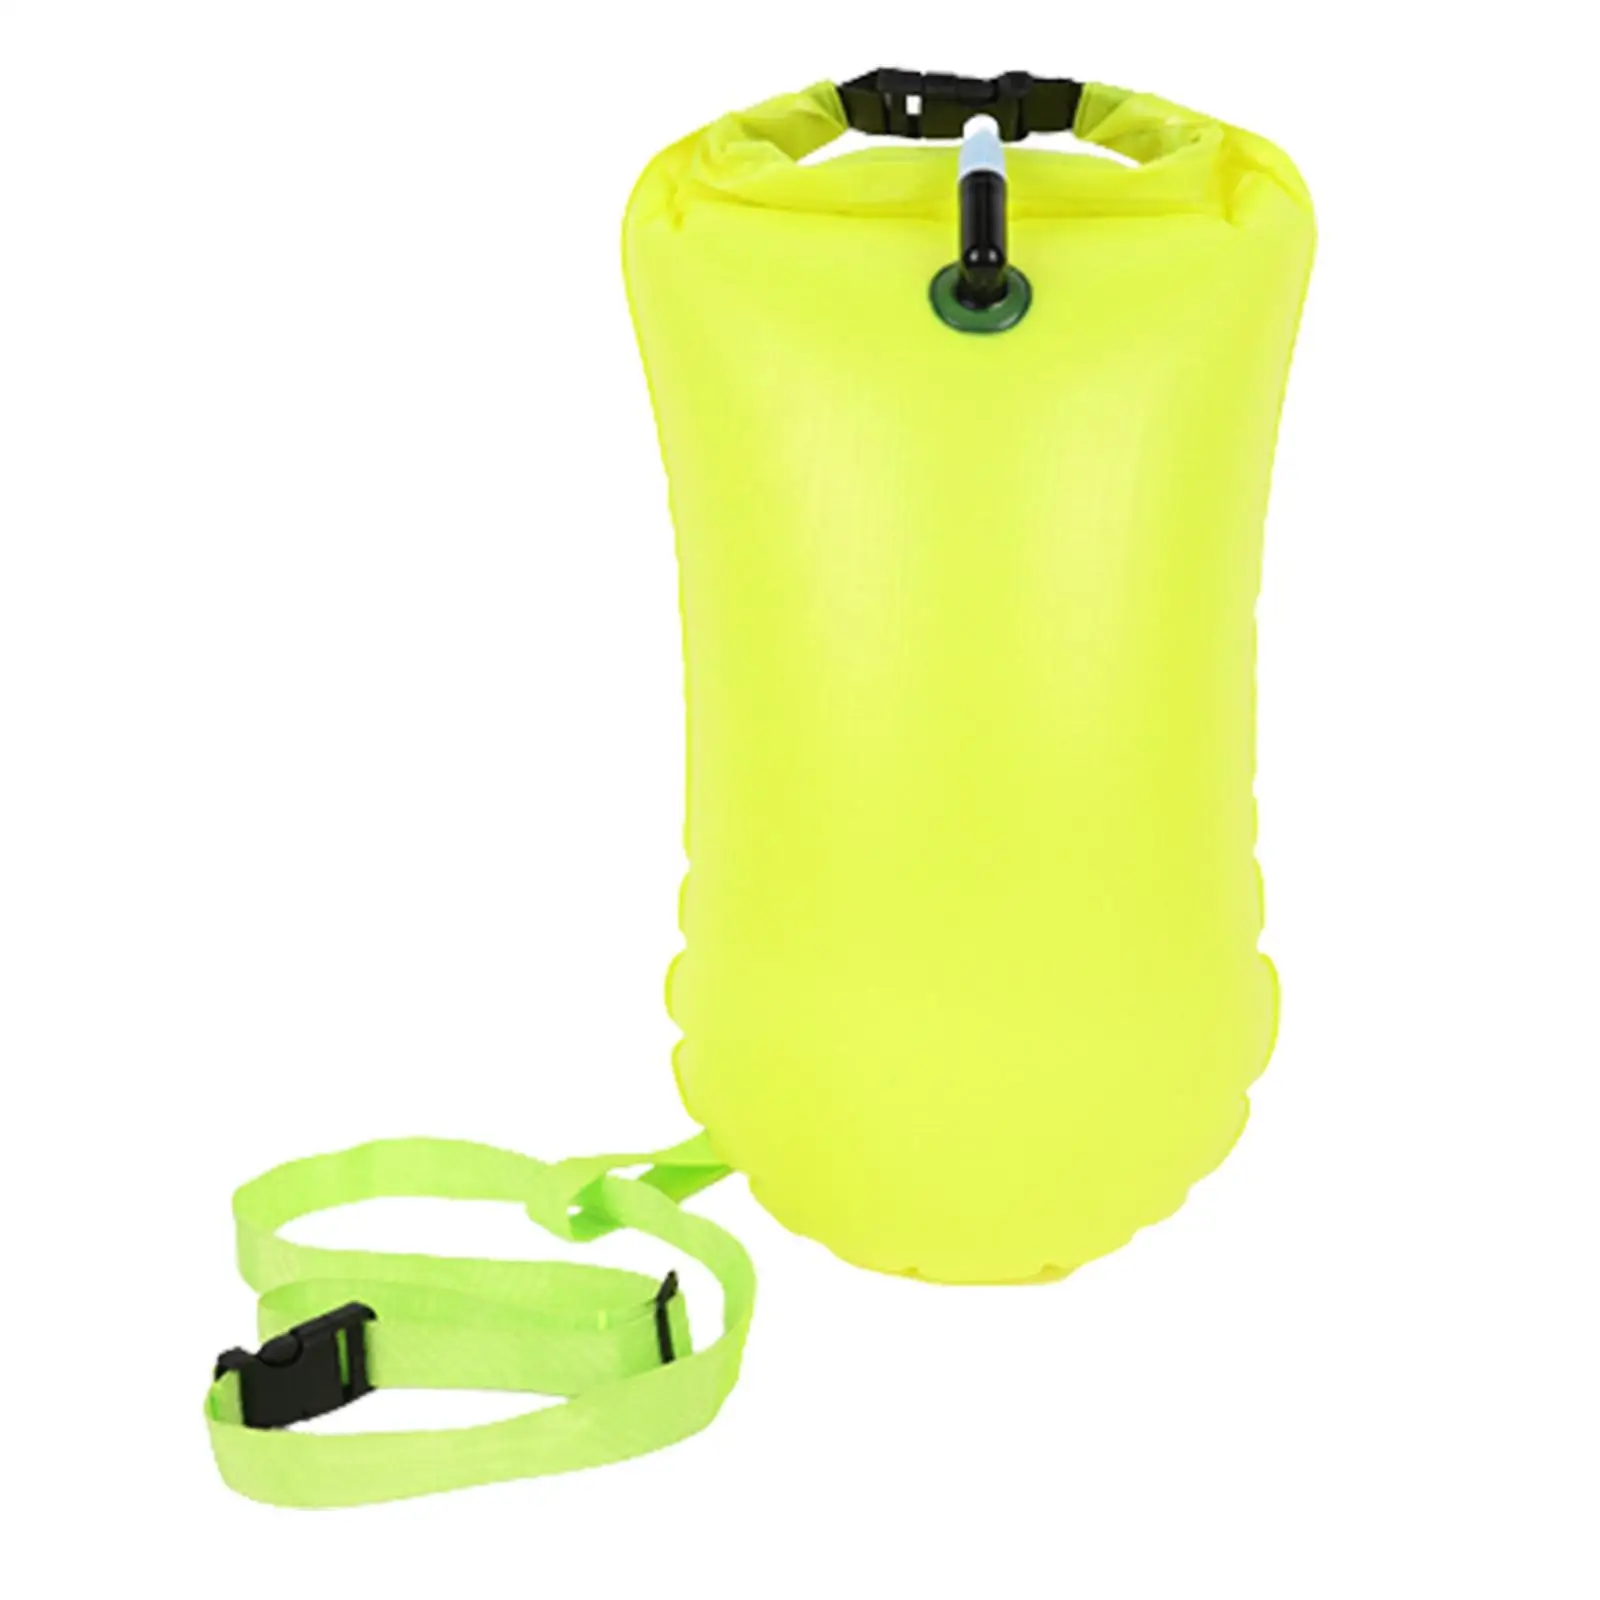 Safety Swim Buoy Waterproof Bag with Adjustable Belt Buoy Float Storage Bag for Diving Hiking Swimming Outdoor Boating